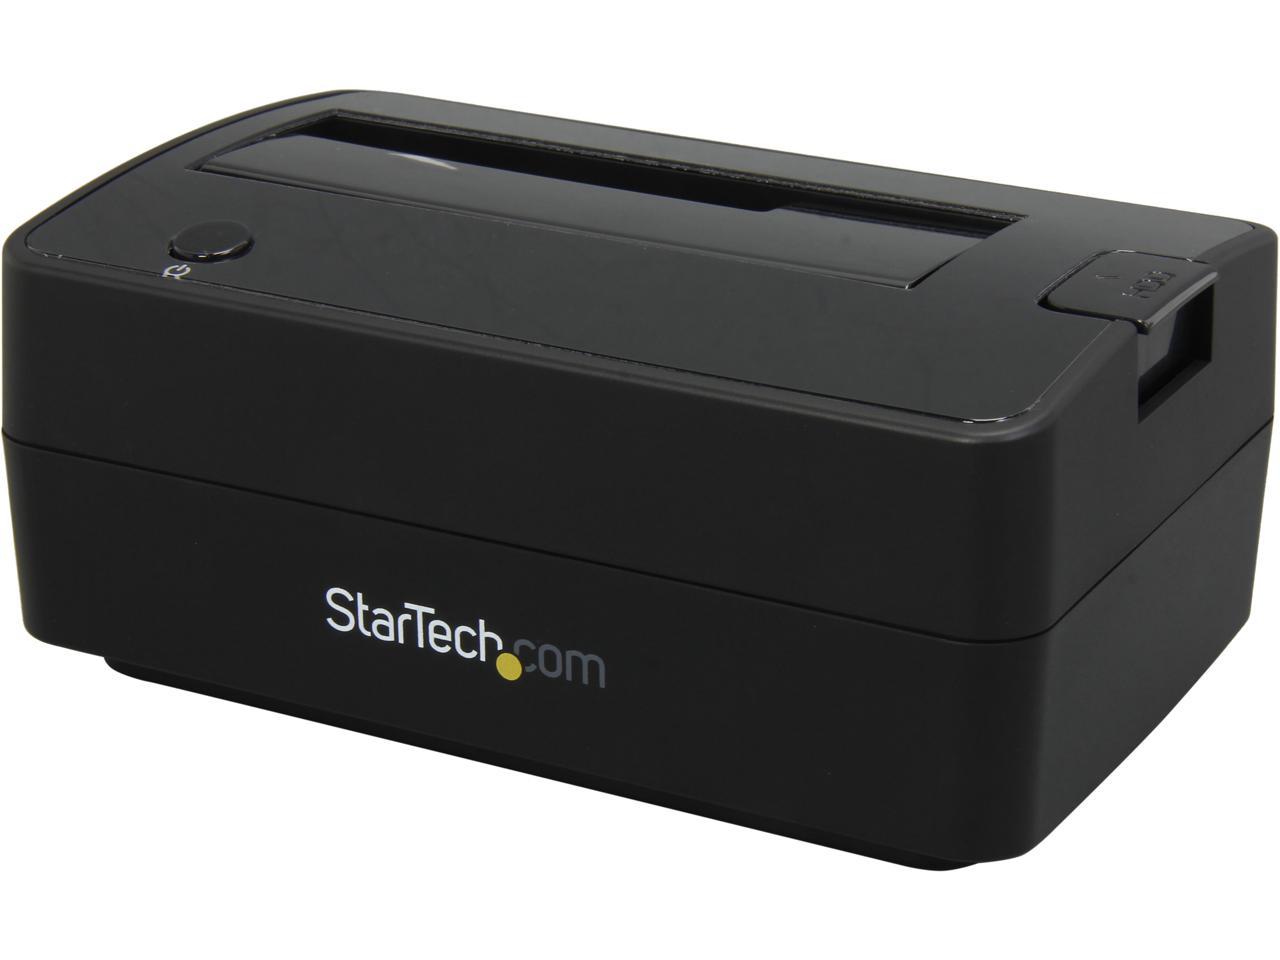 StarTech USB 3.0 SATA Hard Drive Docking Station - image 1 of 2